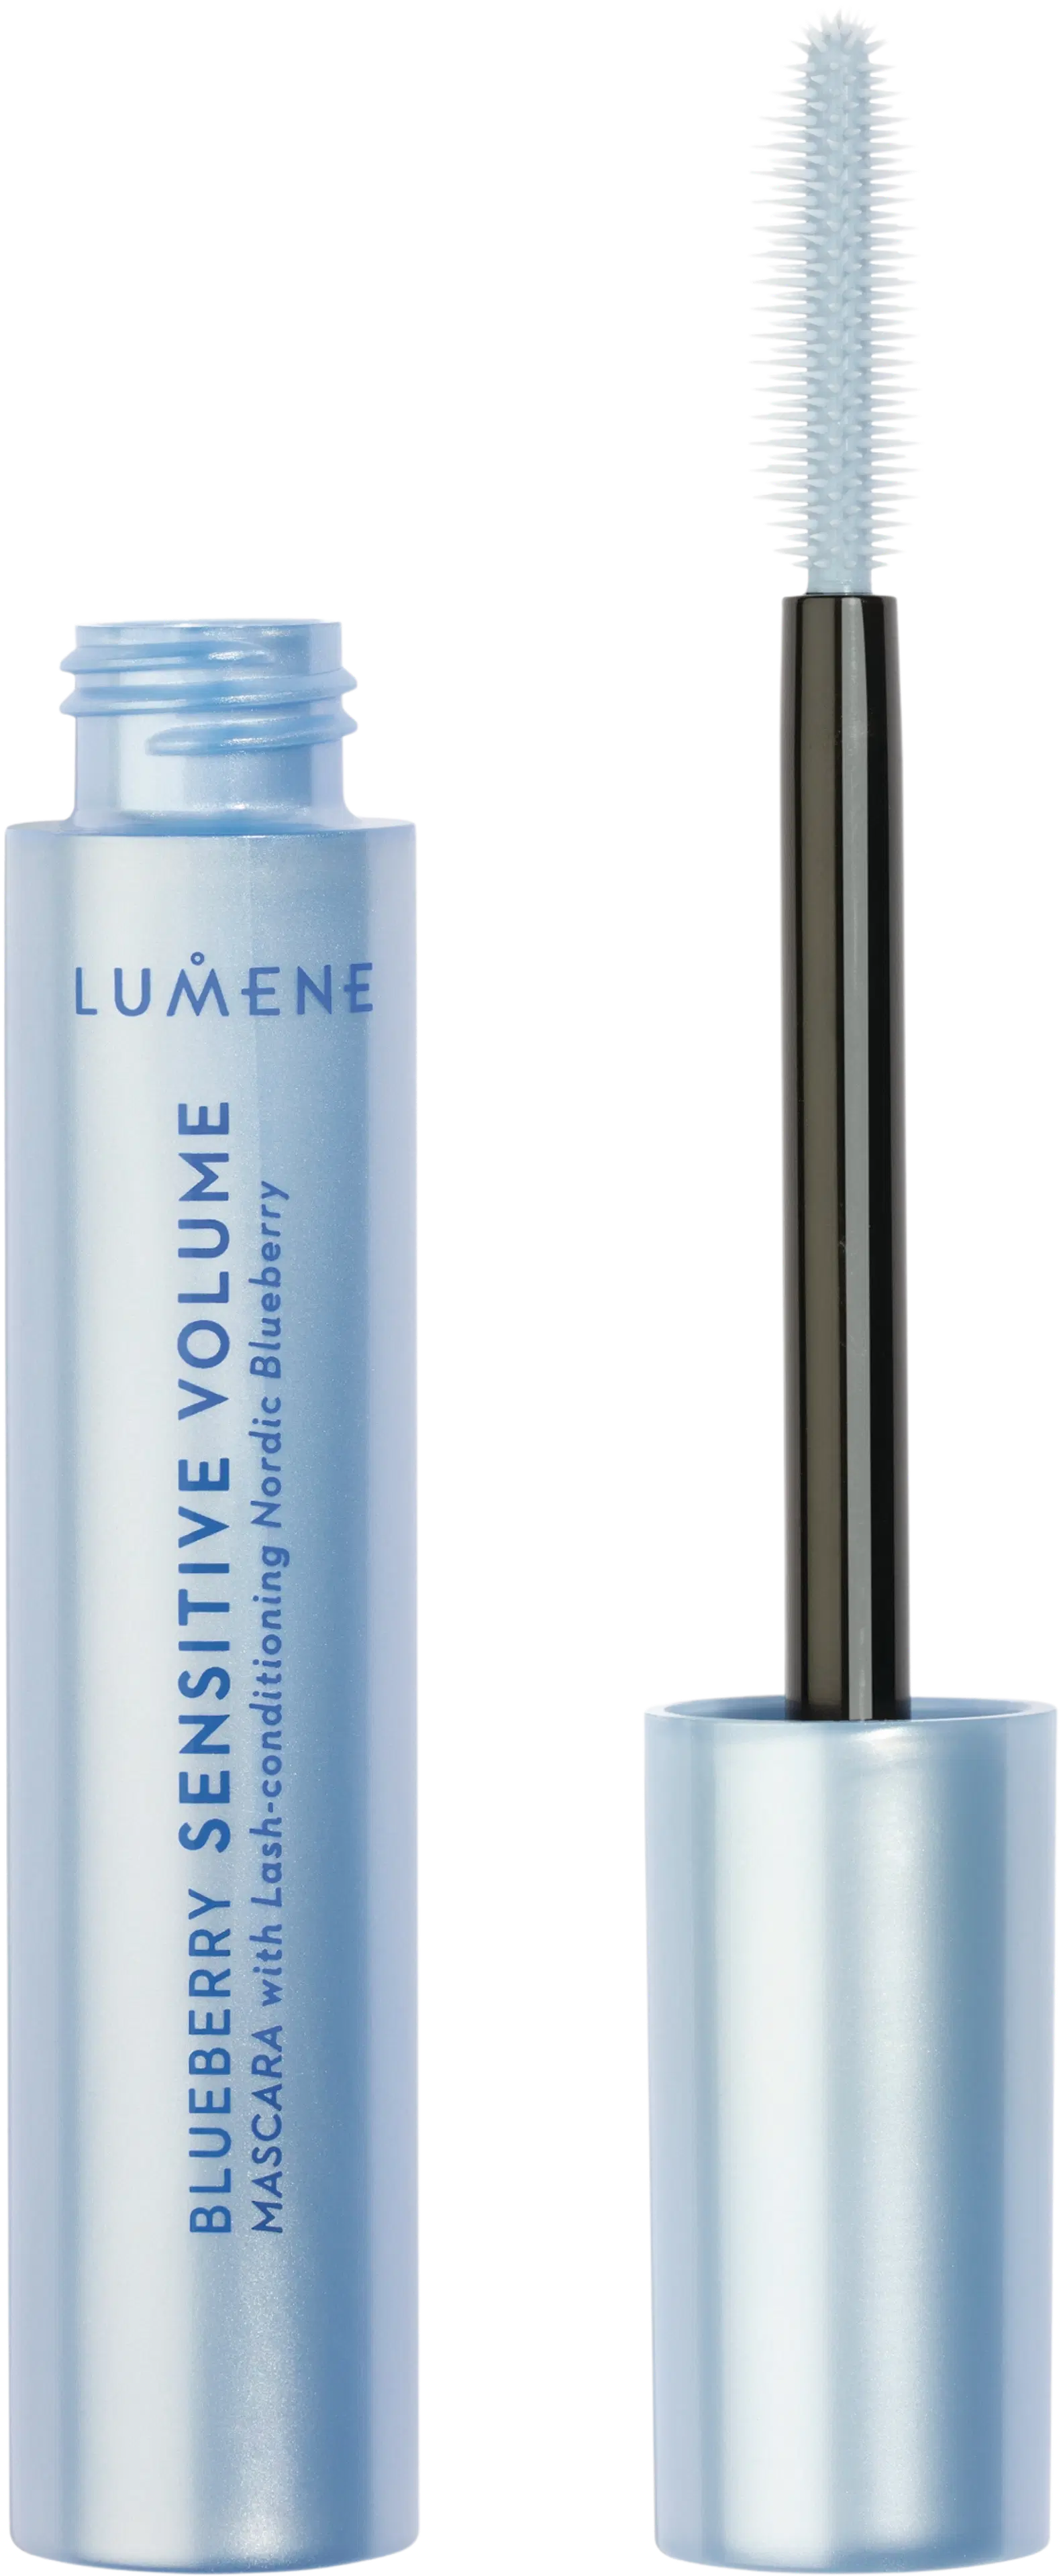 Lumene Blueberry Sensitive Volume Mascara 14ml